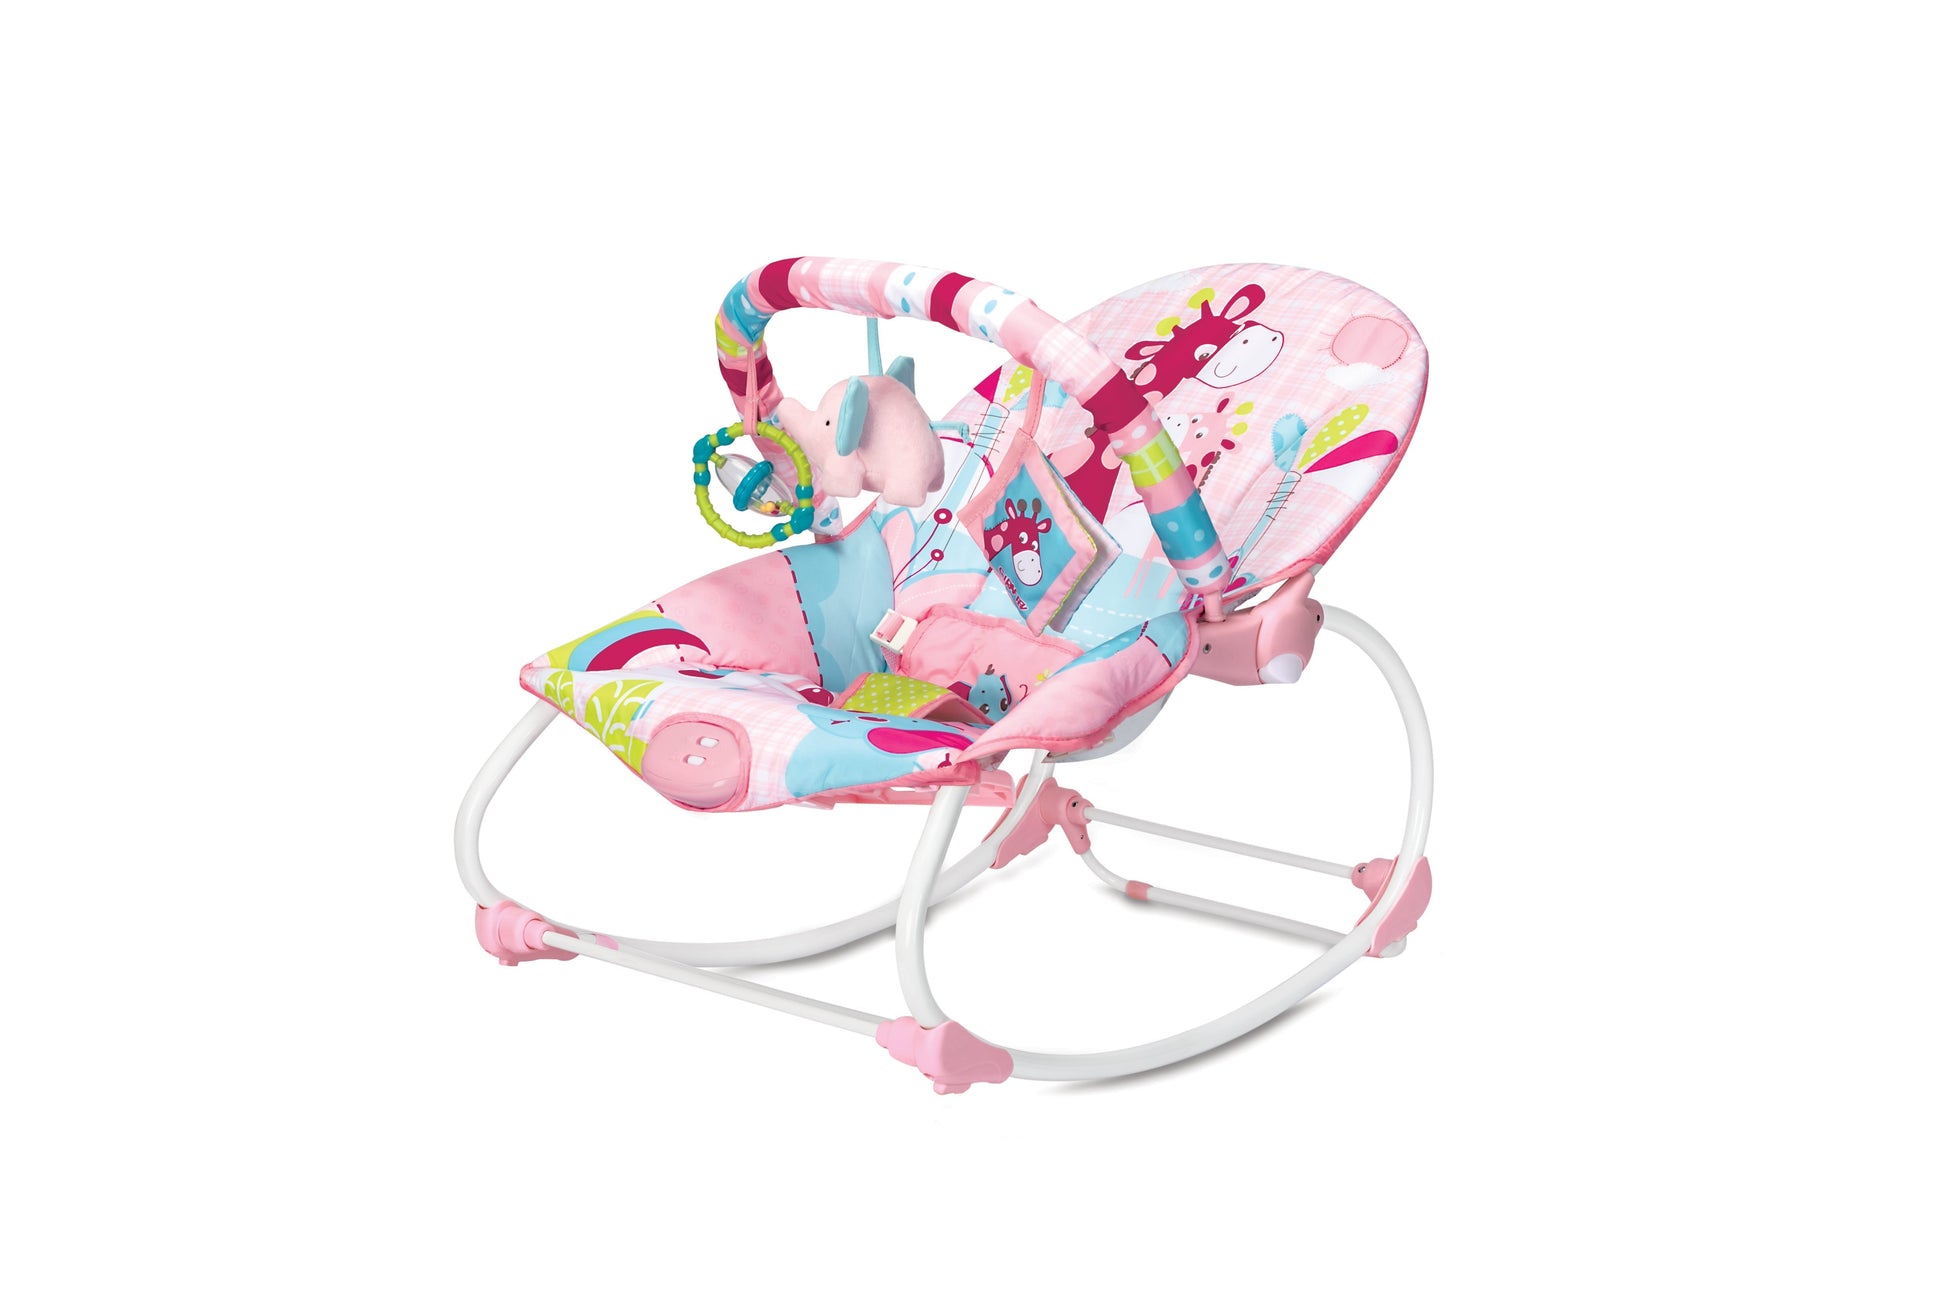 Mastela Baby Rocker || Fashion-Pink || Birth+ to 36months - Toys4All.in